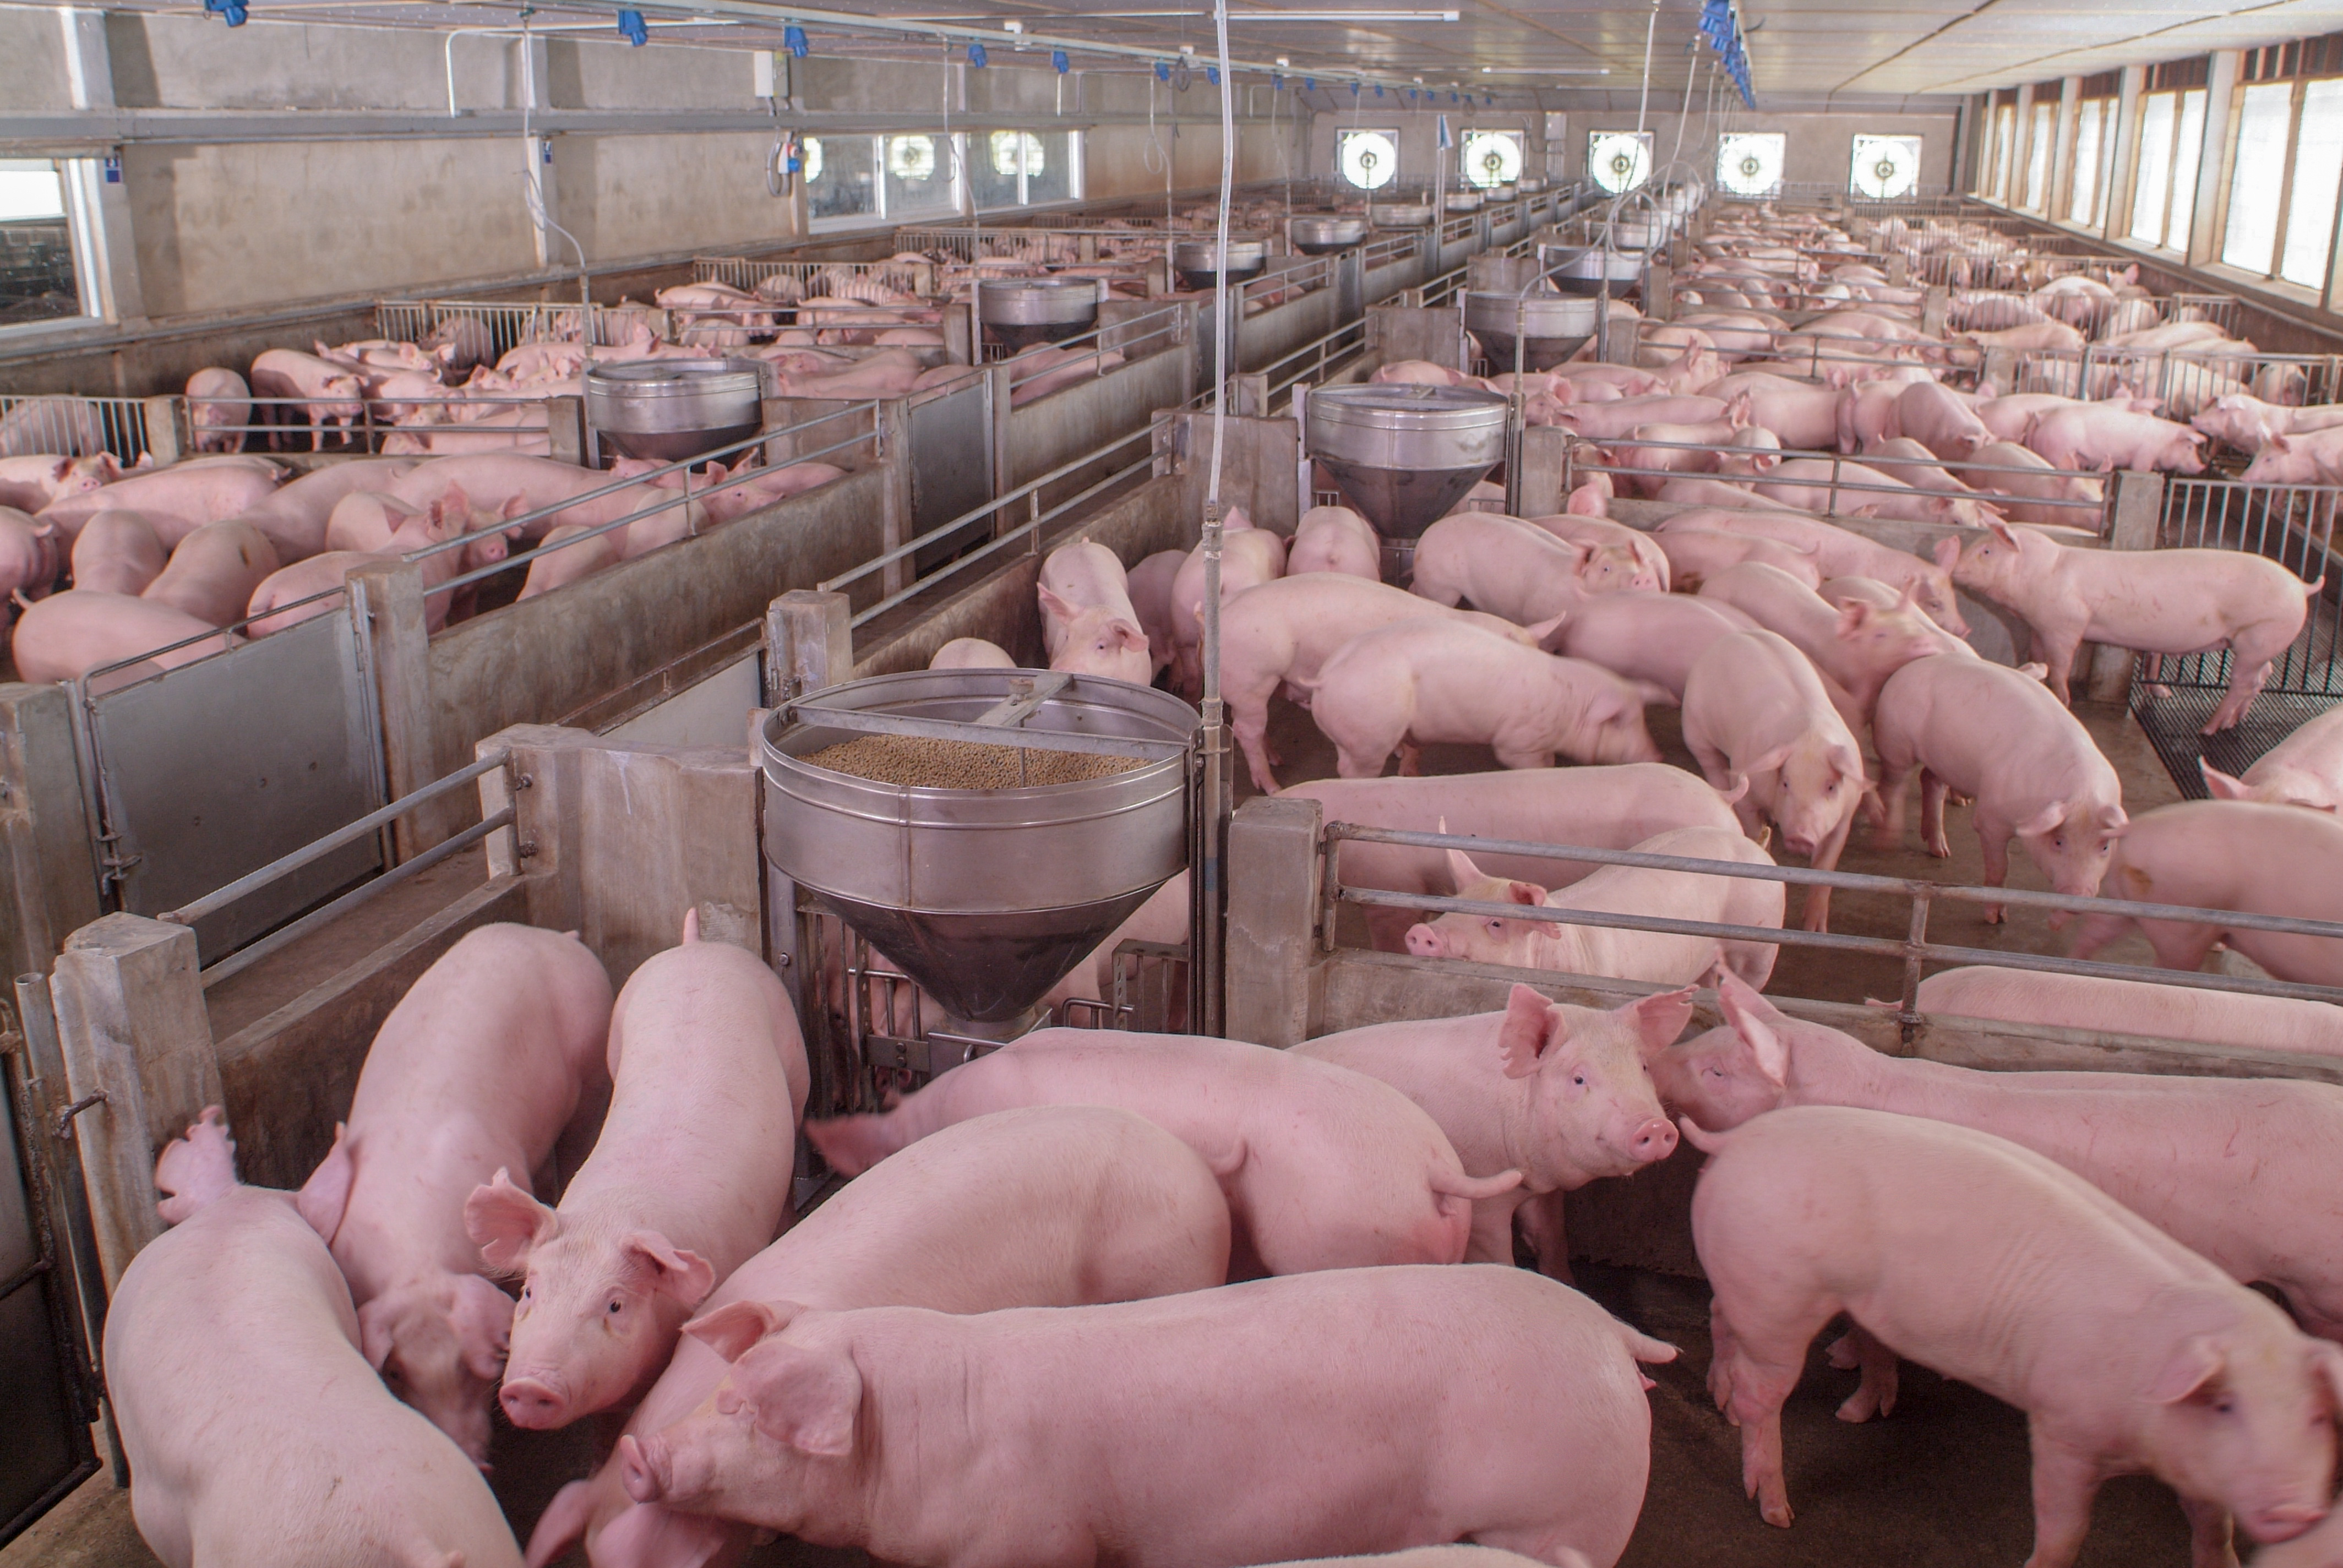 multiple pigs in an indoor barn